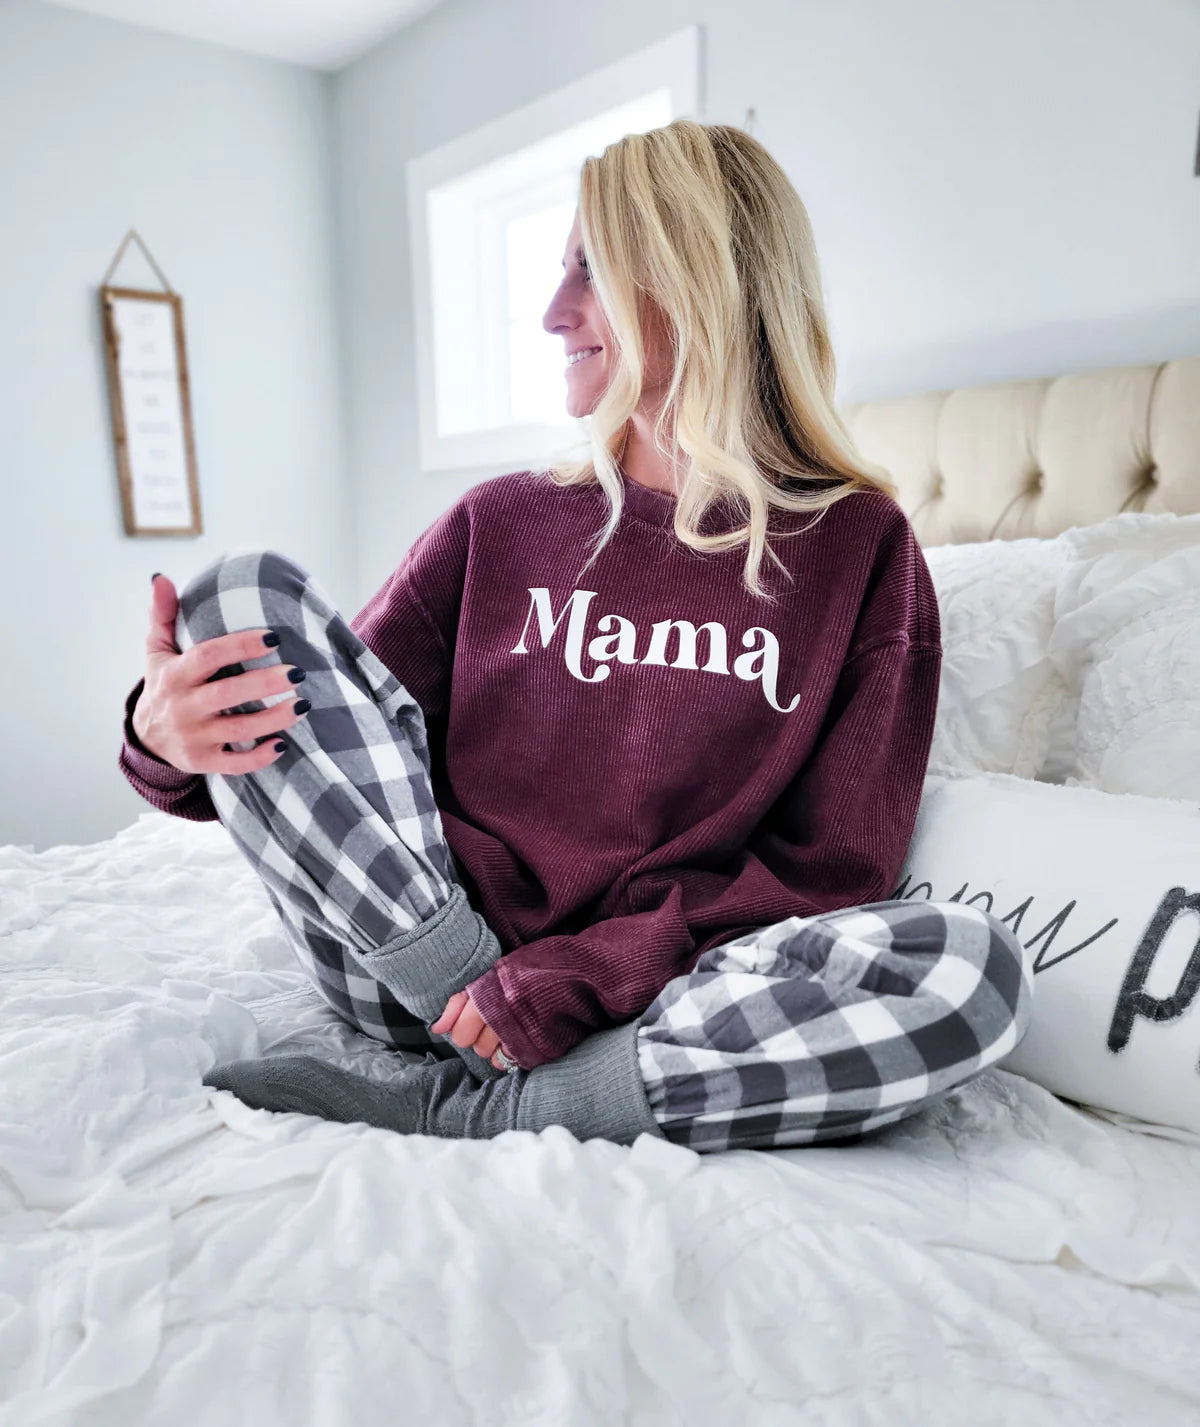 Woman wearing a “Mama” sweatshirt on bed